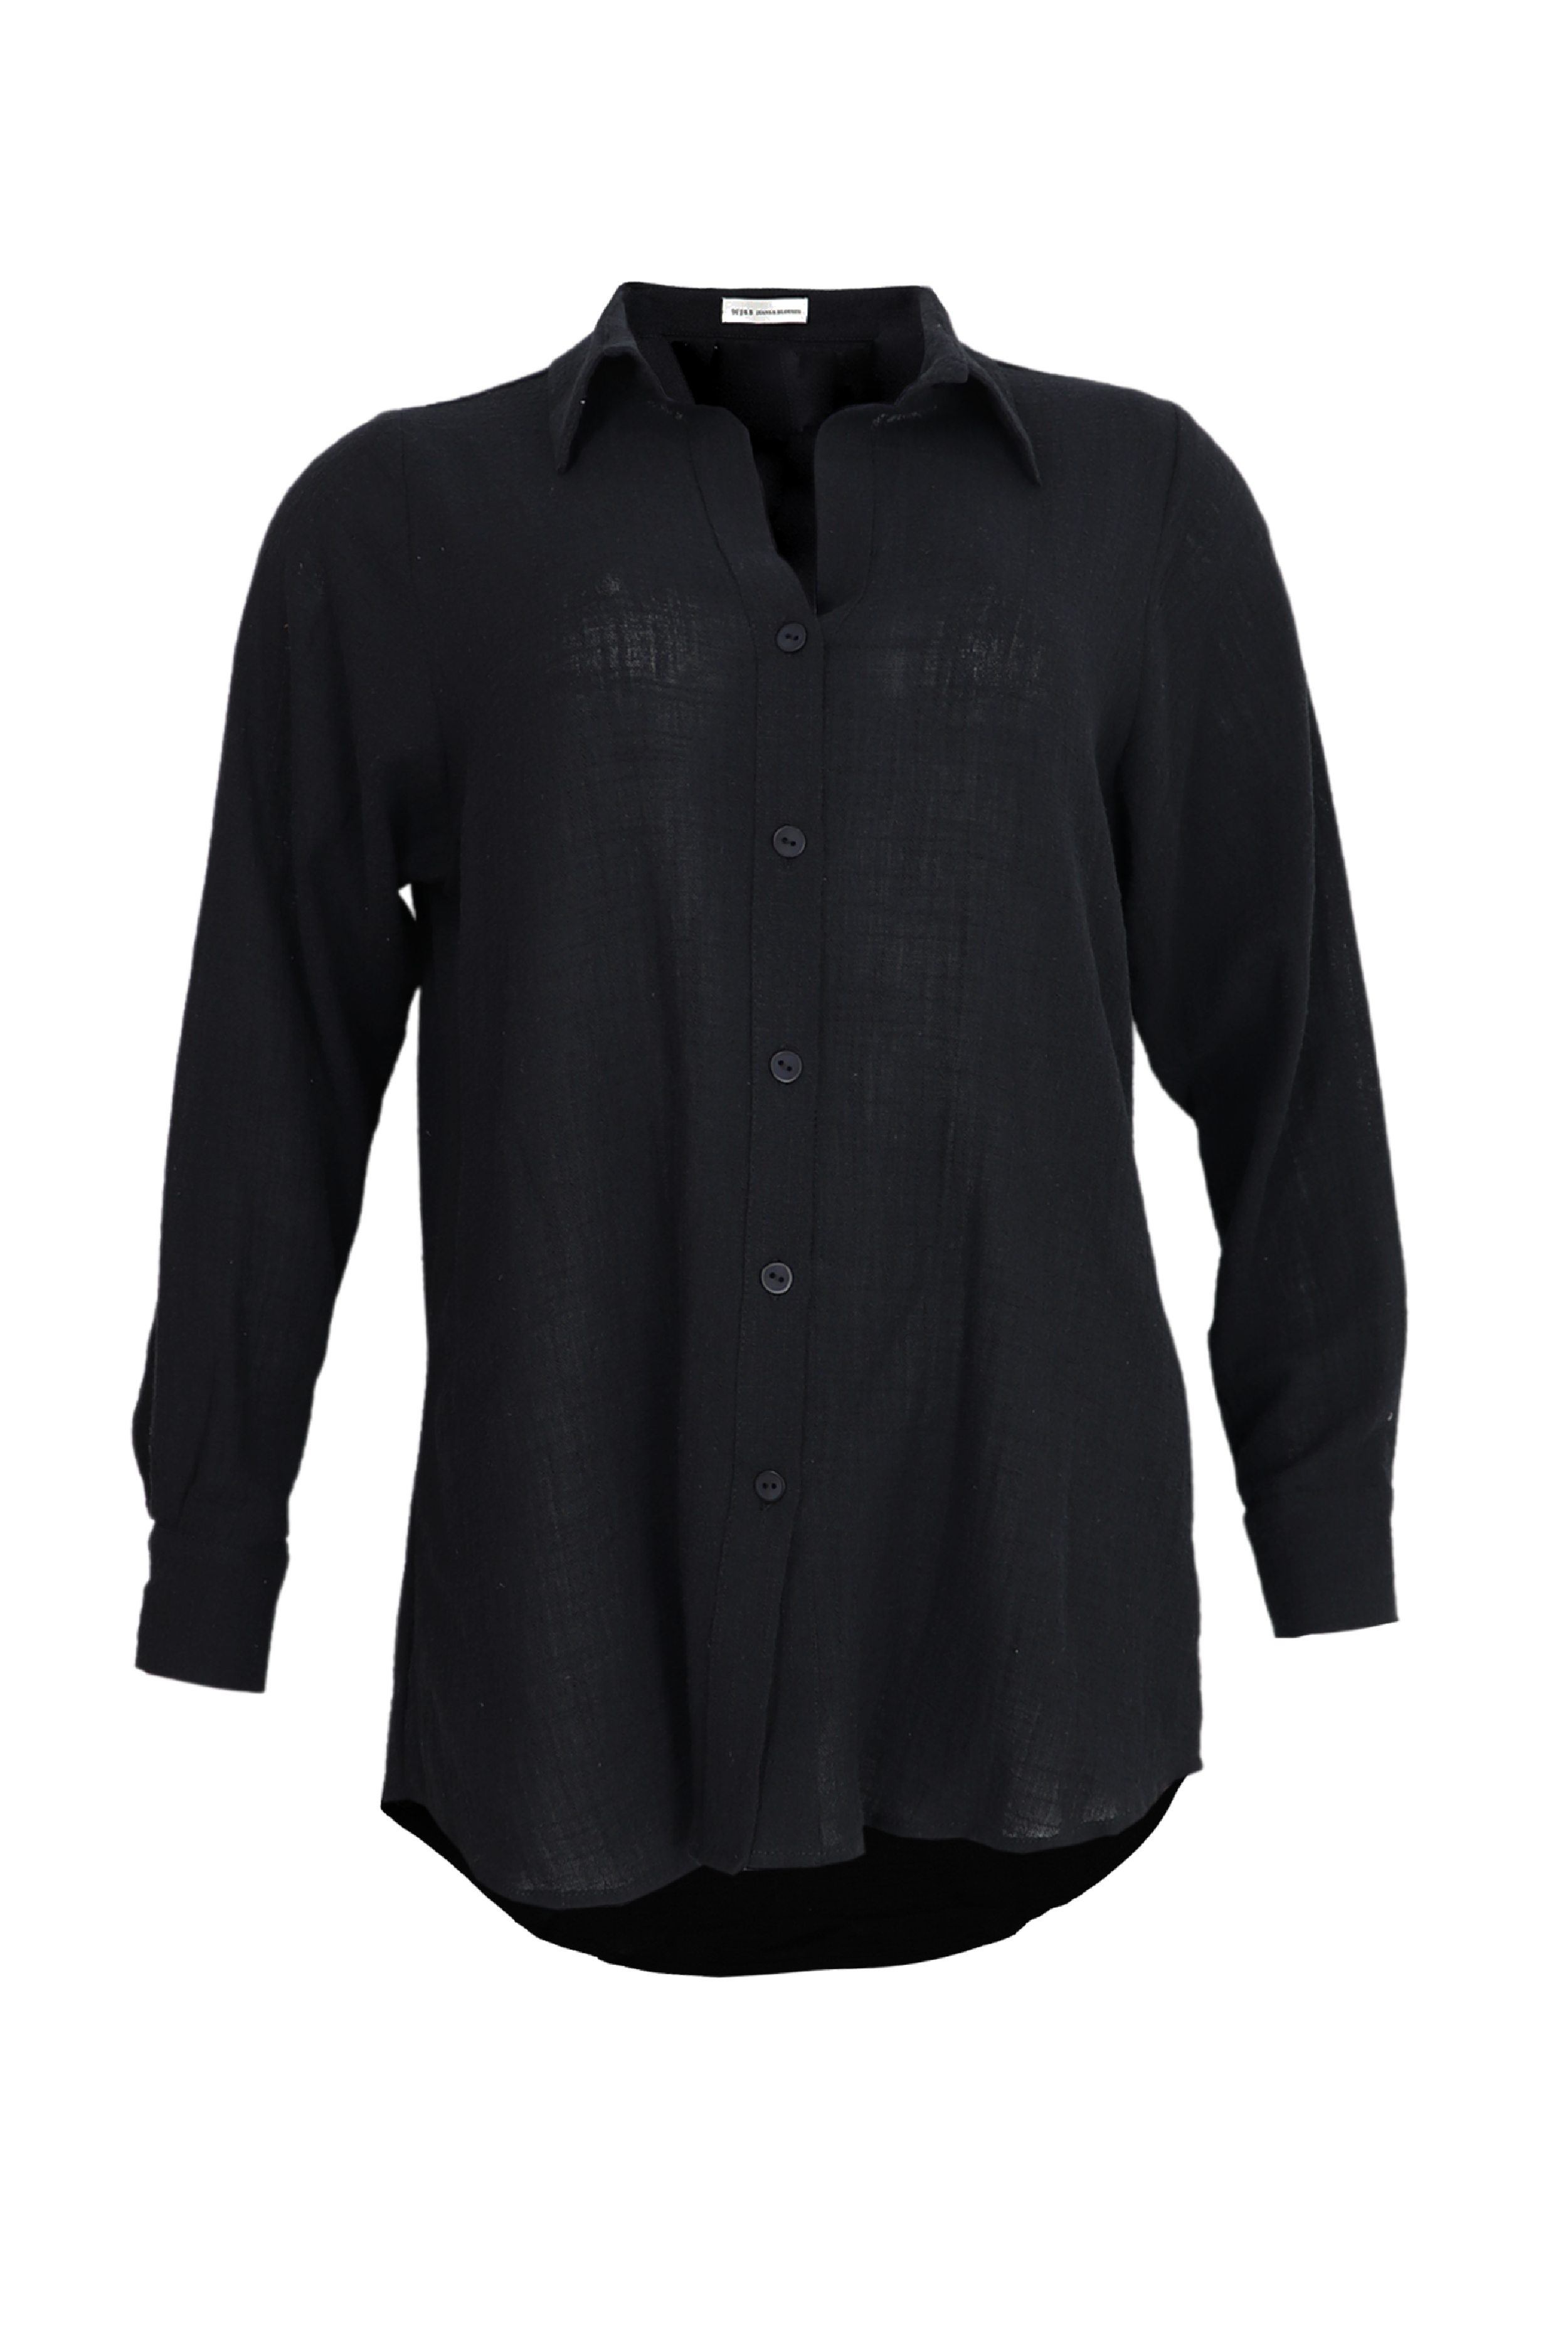 Camisa manga larga delicate color negro